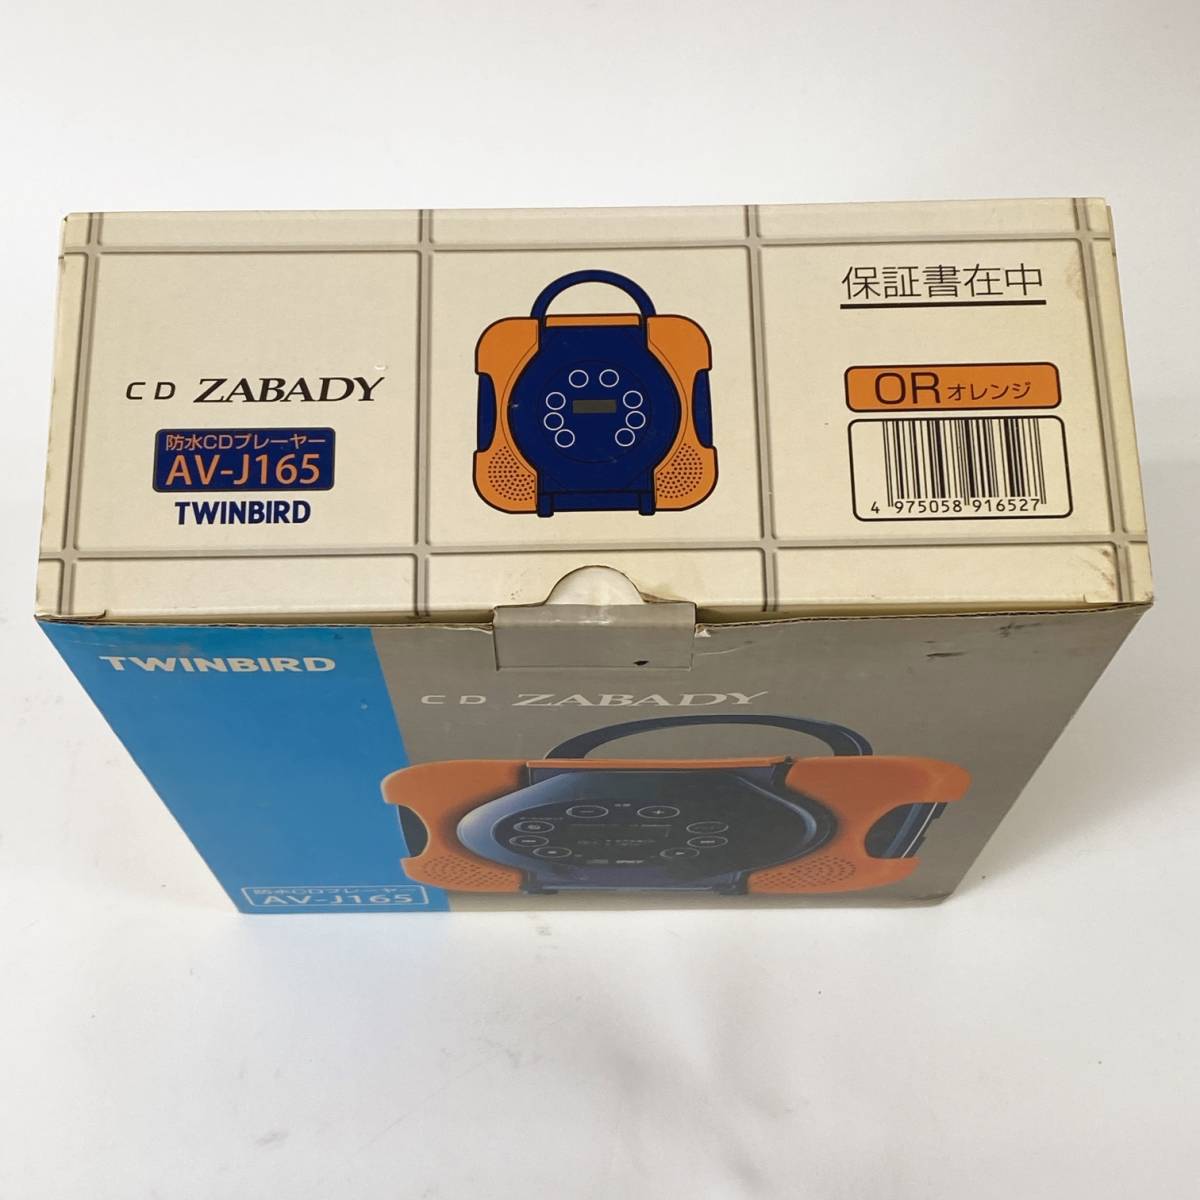 TWINBIRD/ Twin Bird waterproof CD player CD ZABADY AV-J165 orange box attaching electrification verification junk treatment 24b.E